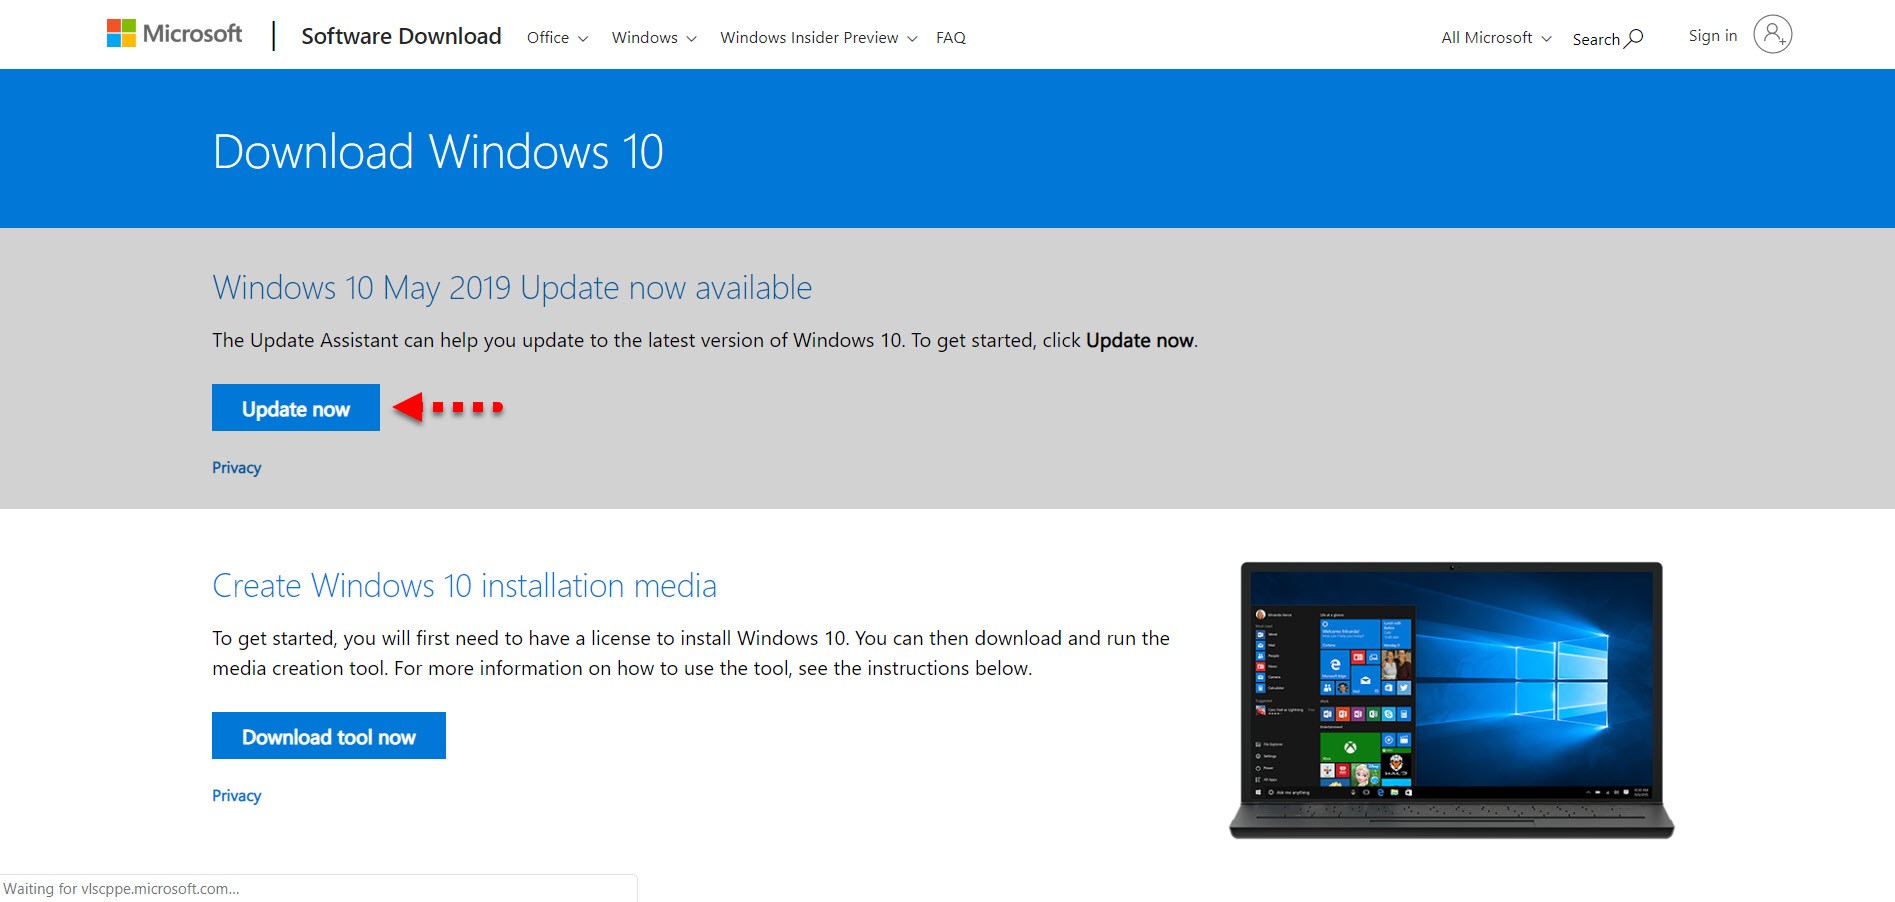 Download Windows 10 new update